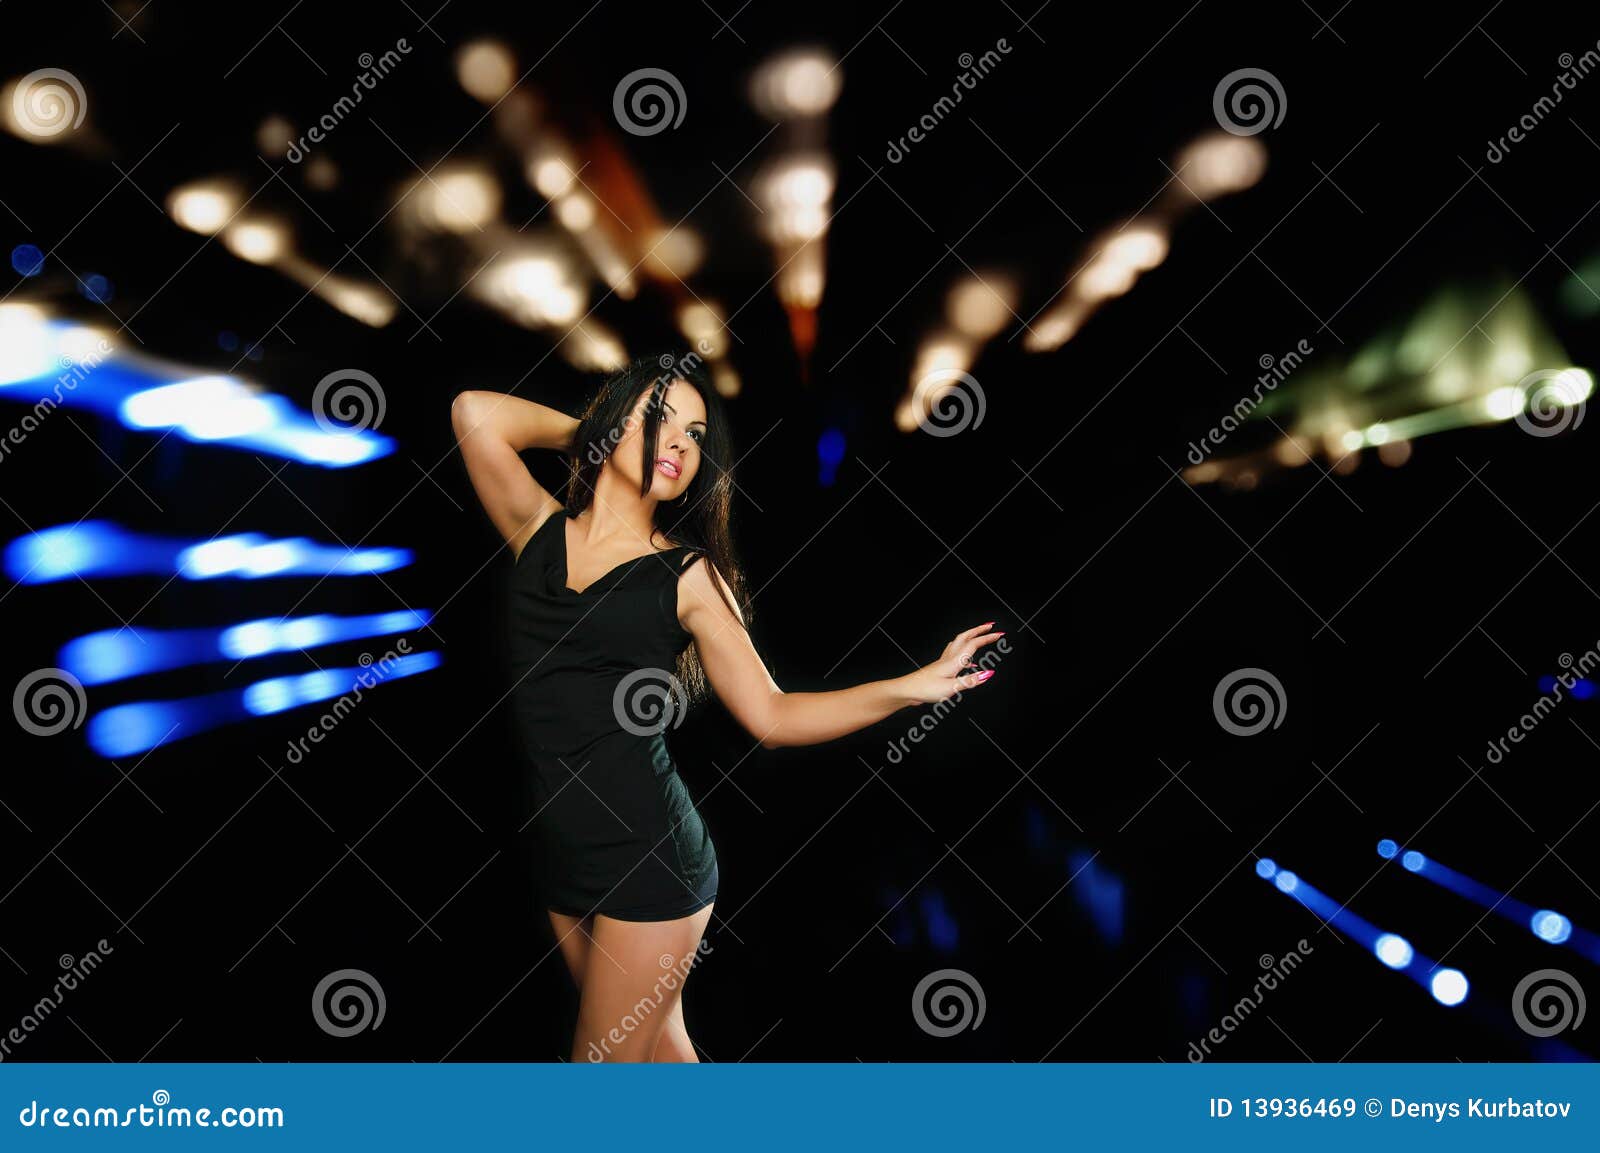 Night giril dancer stock image. Image of dancer, joyful - 13936469